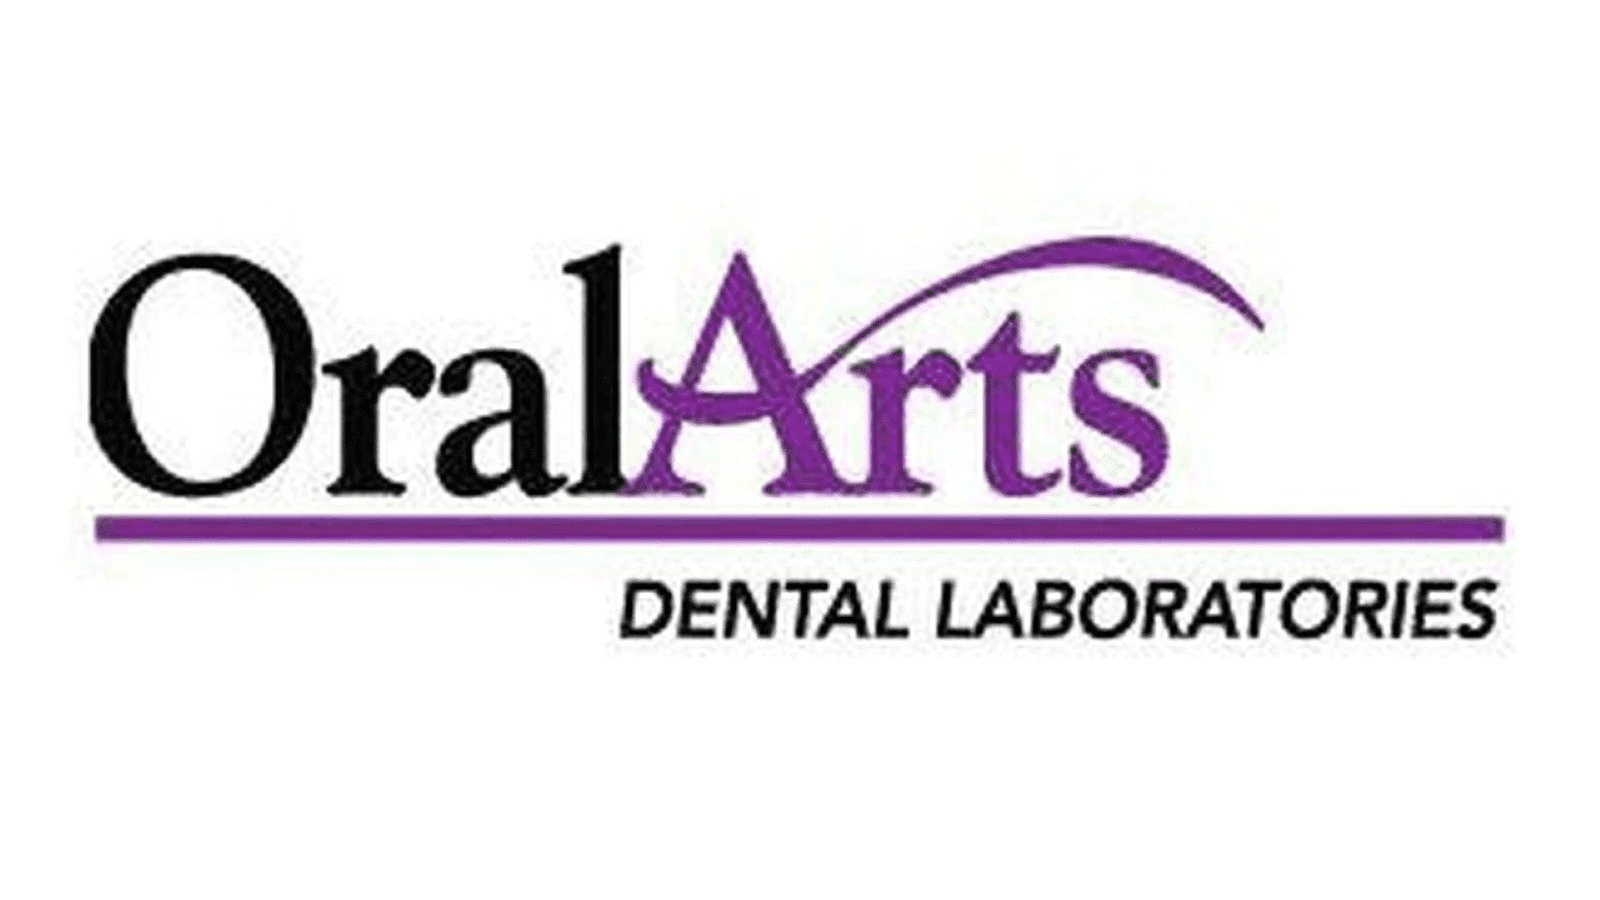 Oralarts dental laboratories